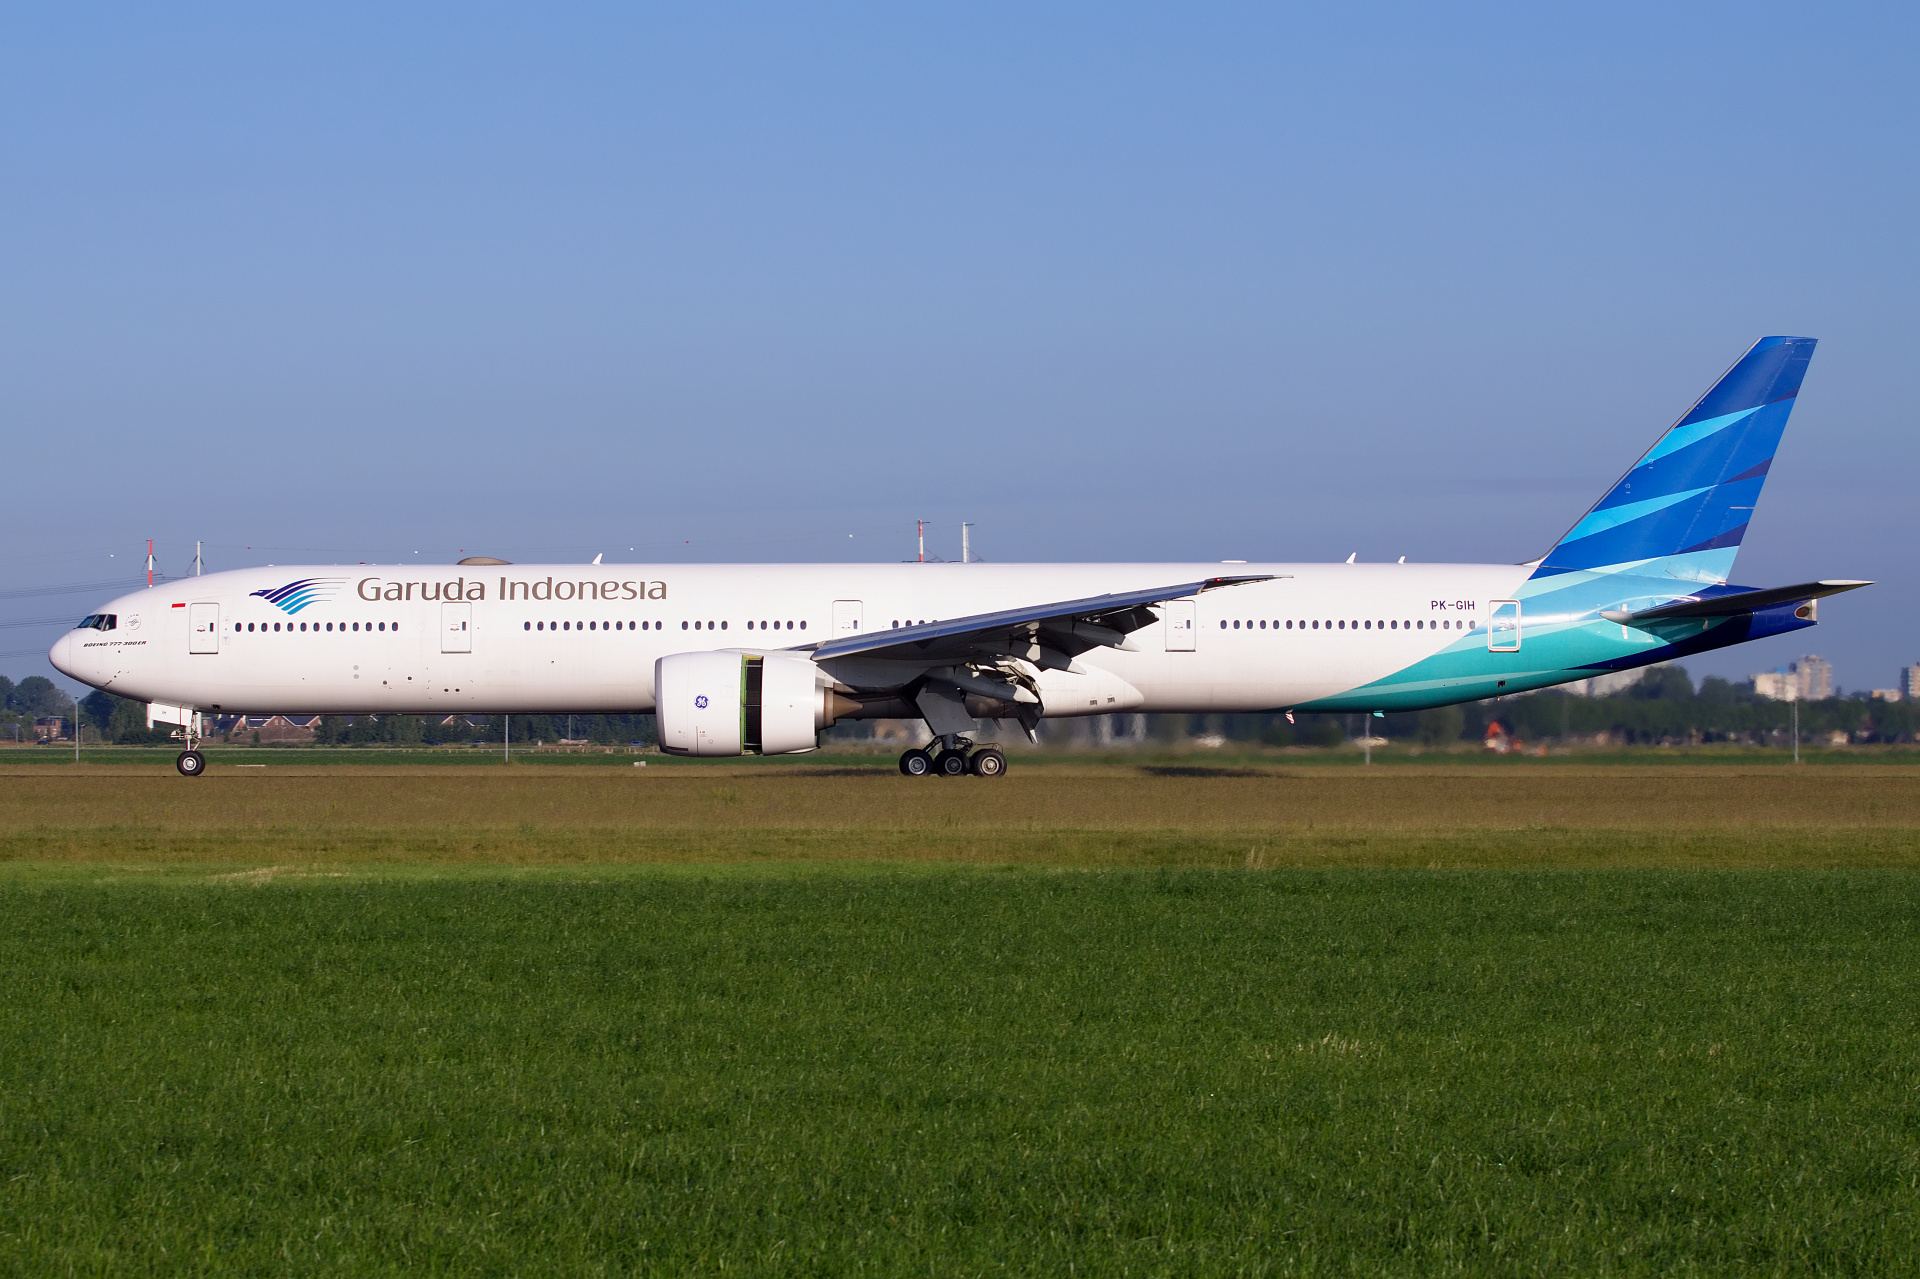 PK-GIH, Garuda Indonesia (Aircraft » Schiphol Spotting » Boeing 777-300ER)